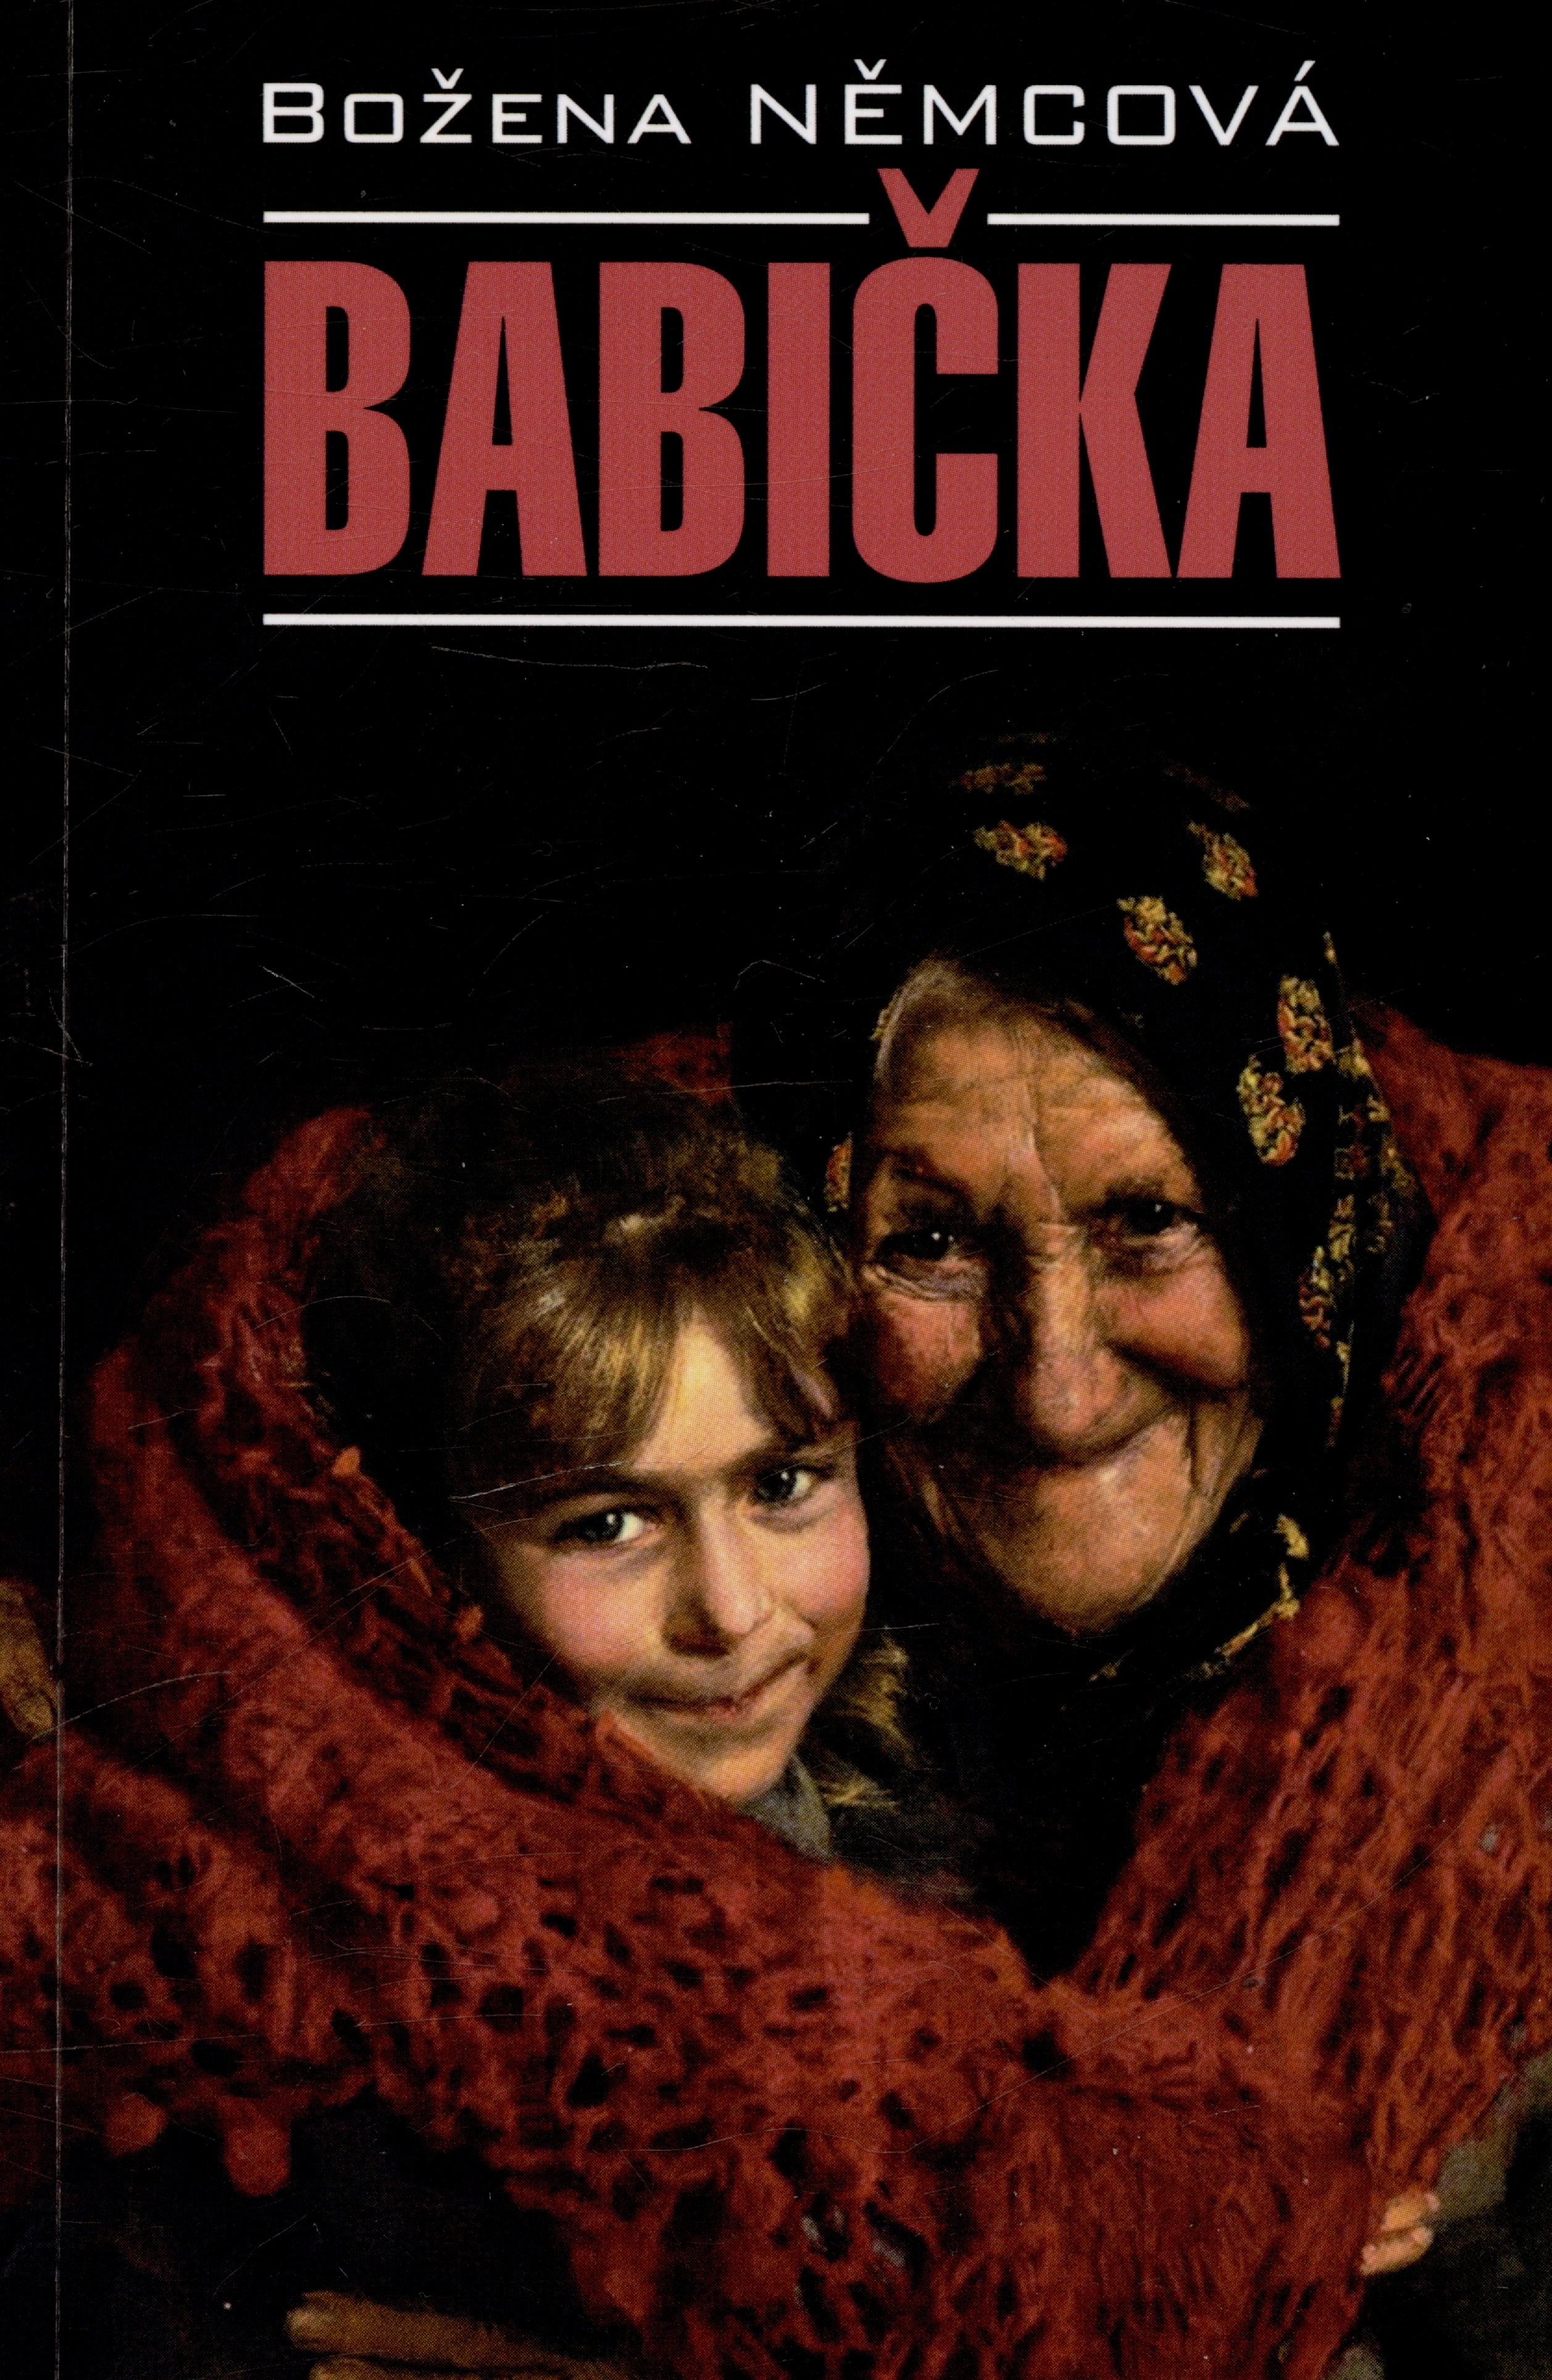 Немцова Божена Babicka / Бабушка ( книга для чтения на чешском языке) чапек карел книга апокрифов книга для чтения на чешском языке